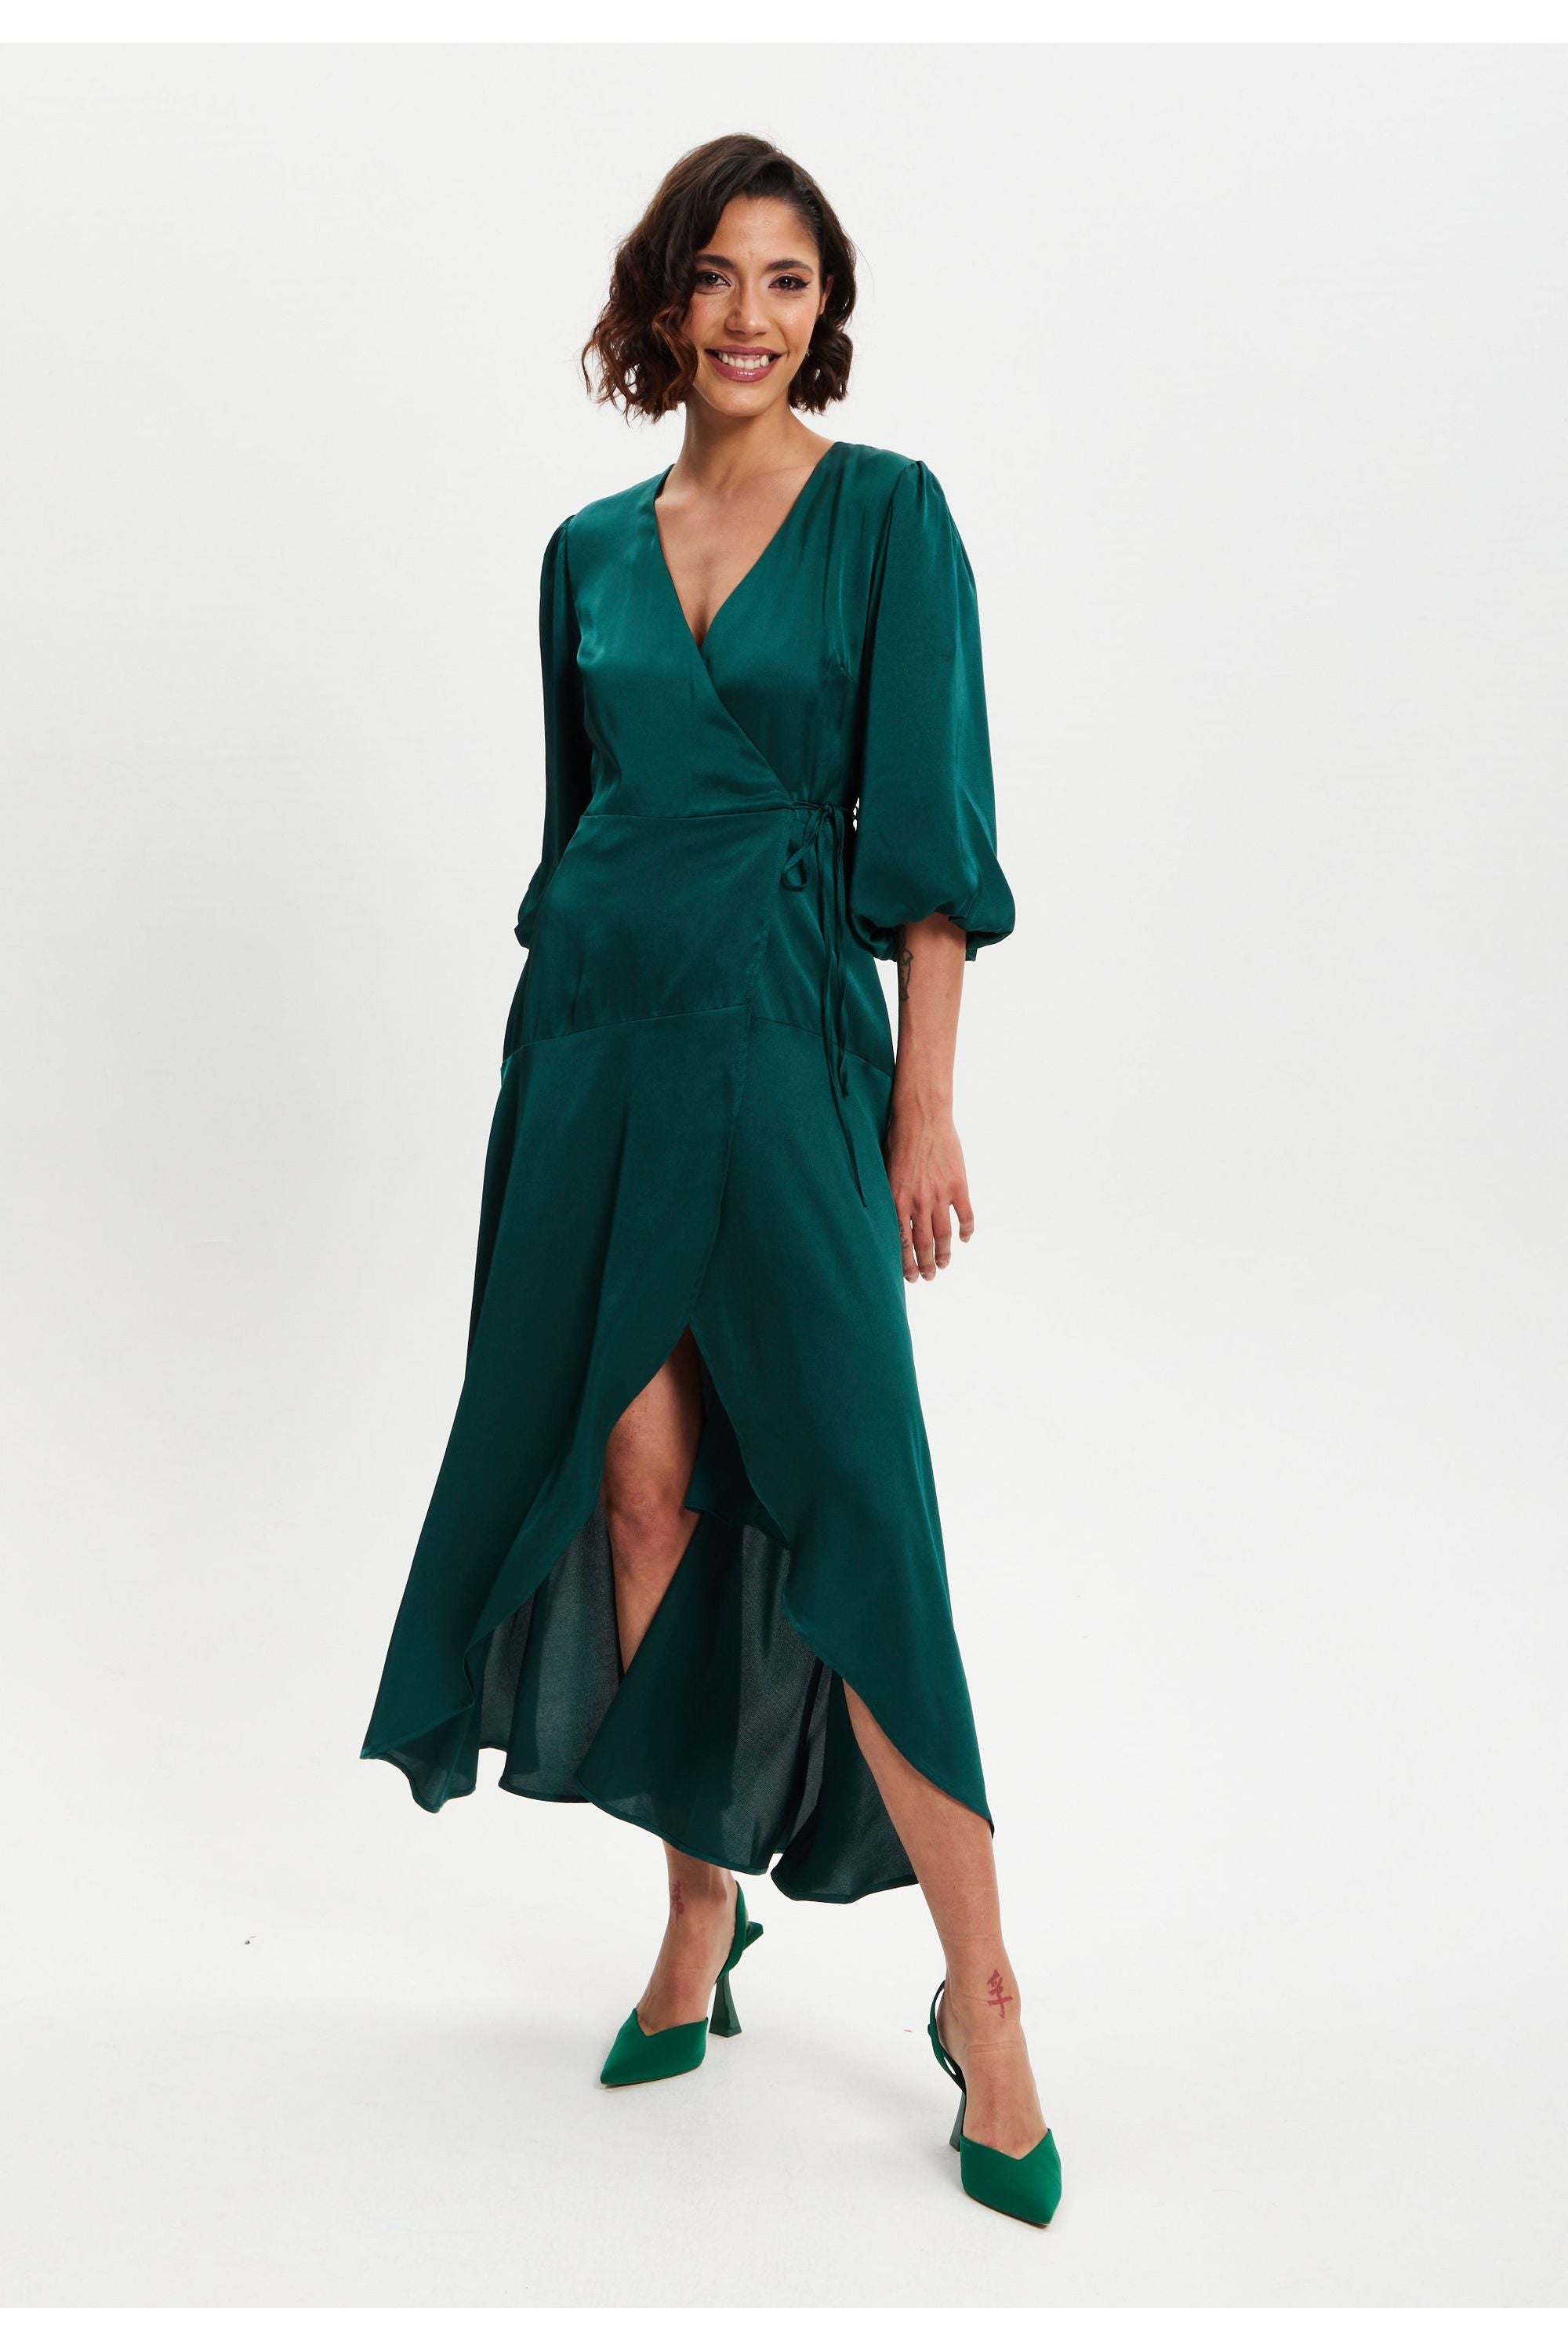 Dark Green Midi Wrap Dress With Short Puff Sleeves LIQ20-128DarkGreen